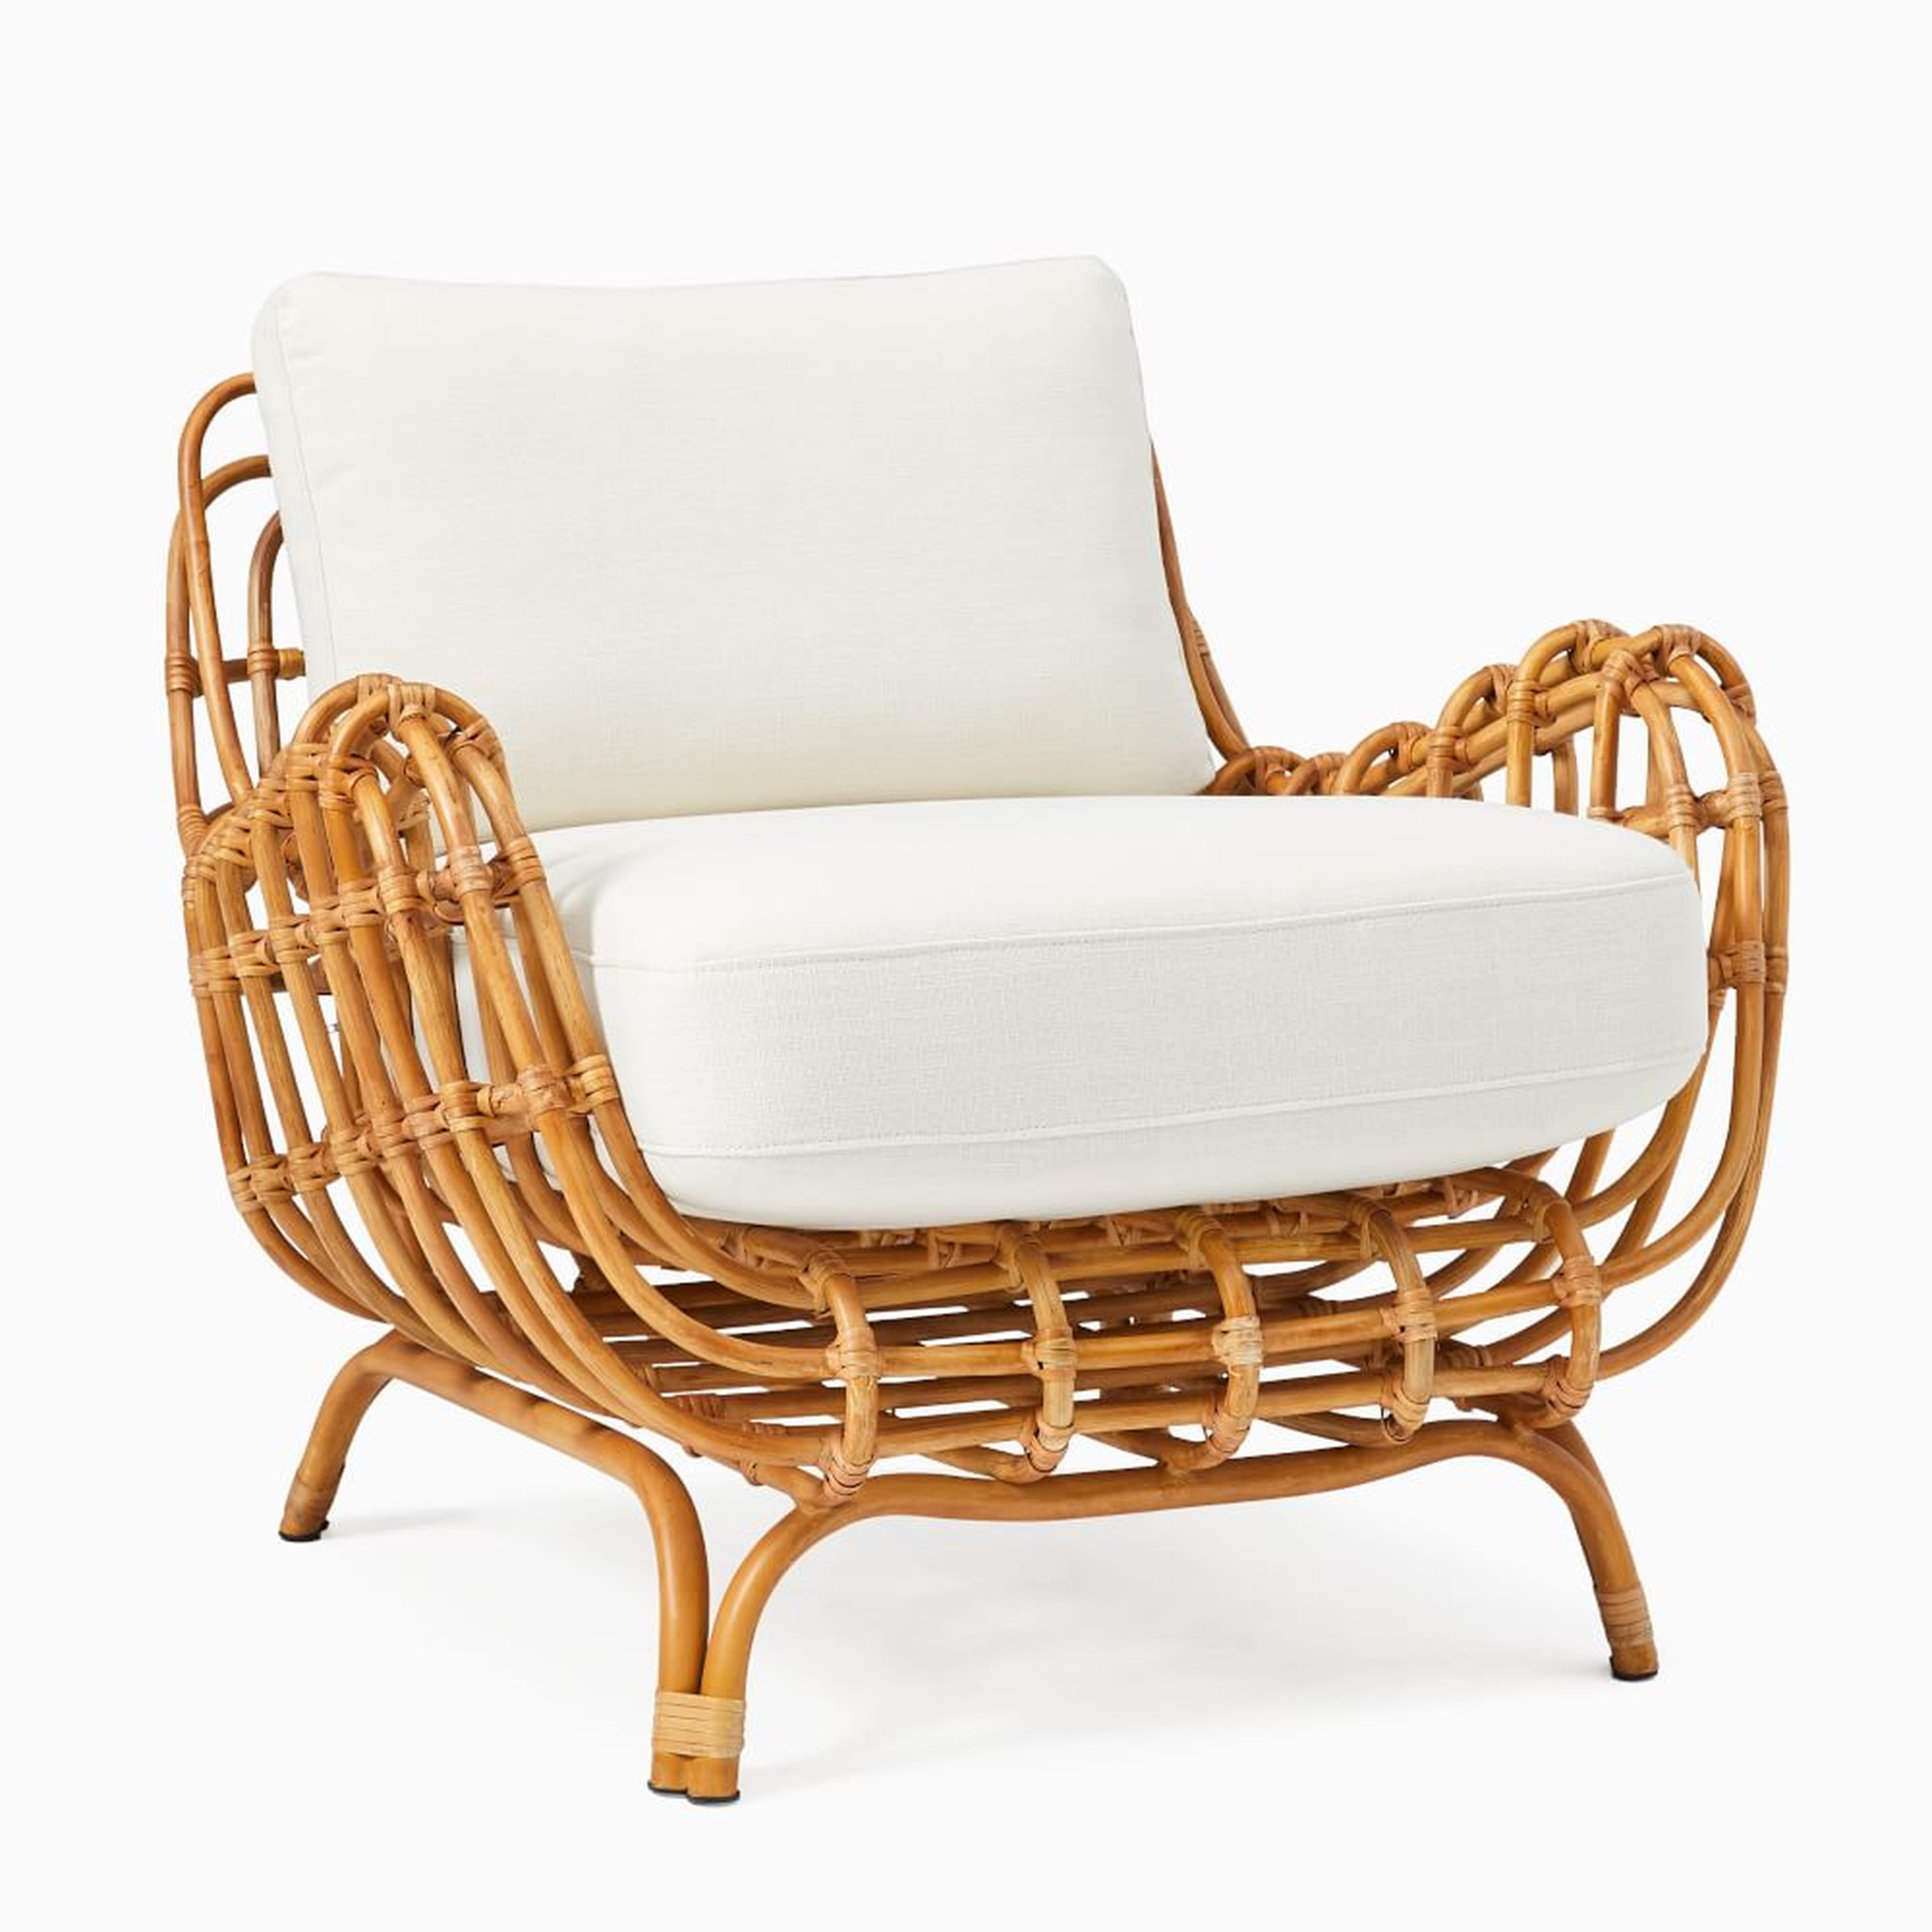 Savannah Rattan Chair + Cushion, Poly, Yarn Dyed Linen Weave, Stone White, Natural Rattan - West Elm